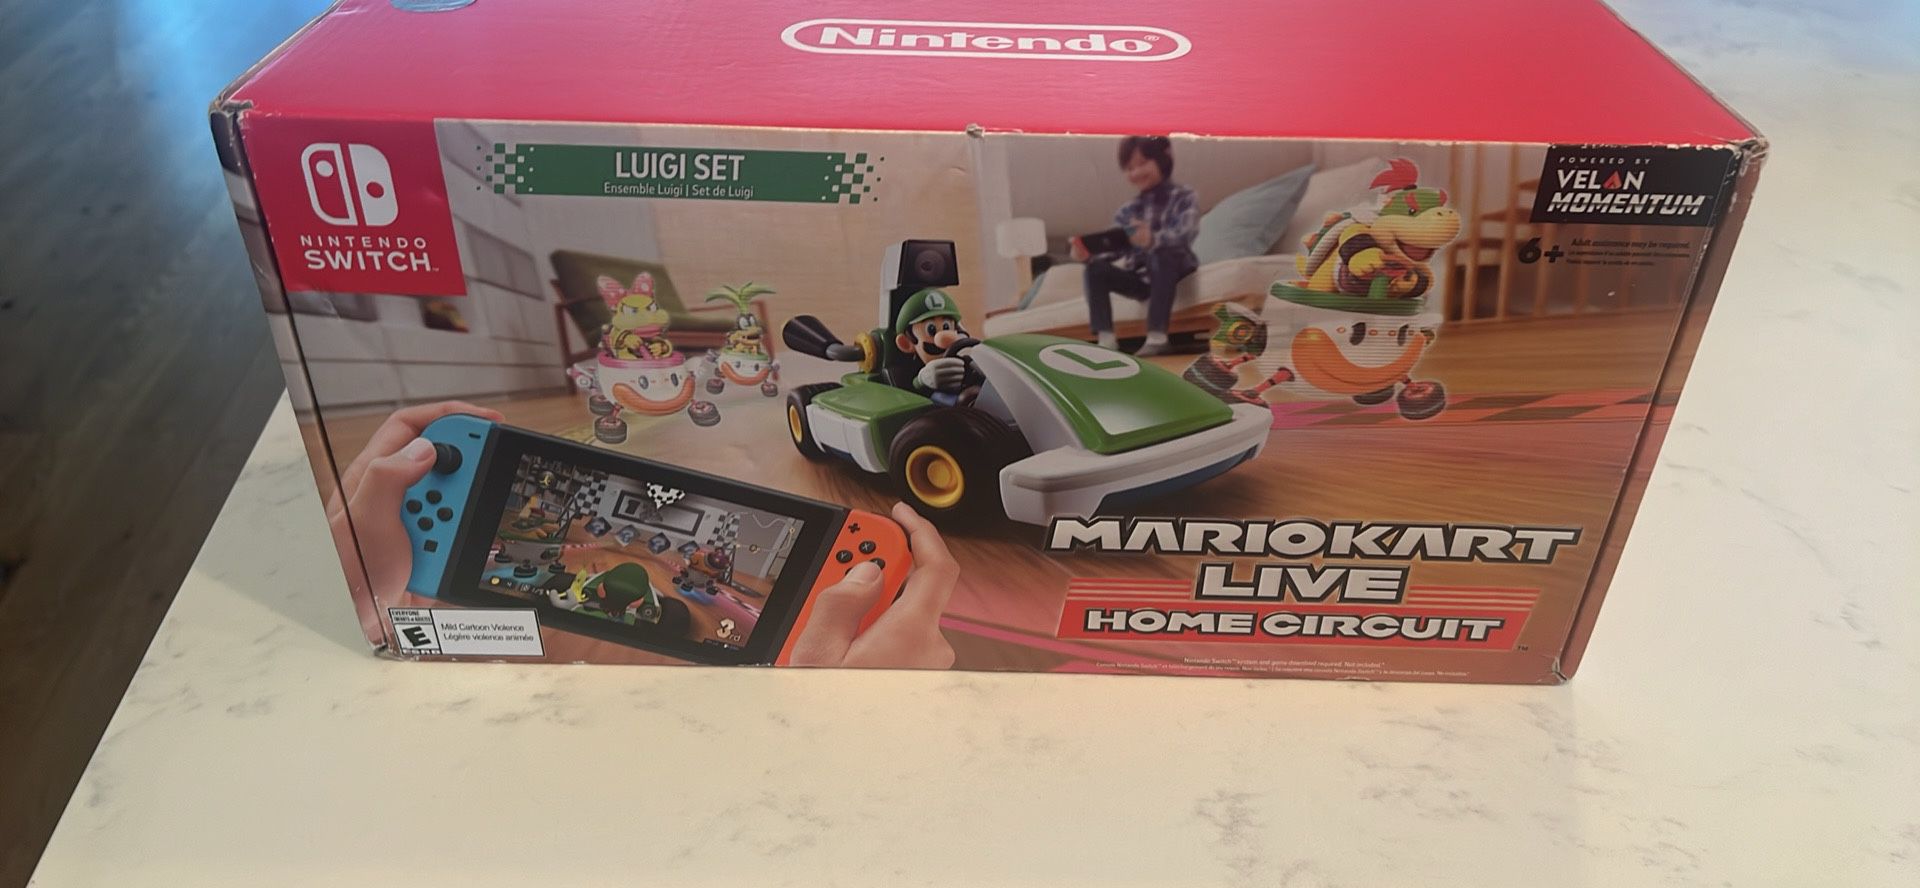 Mario kart live Home circuit. Luigi Edition.